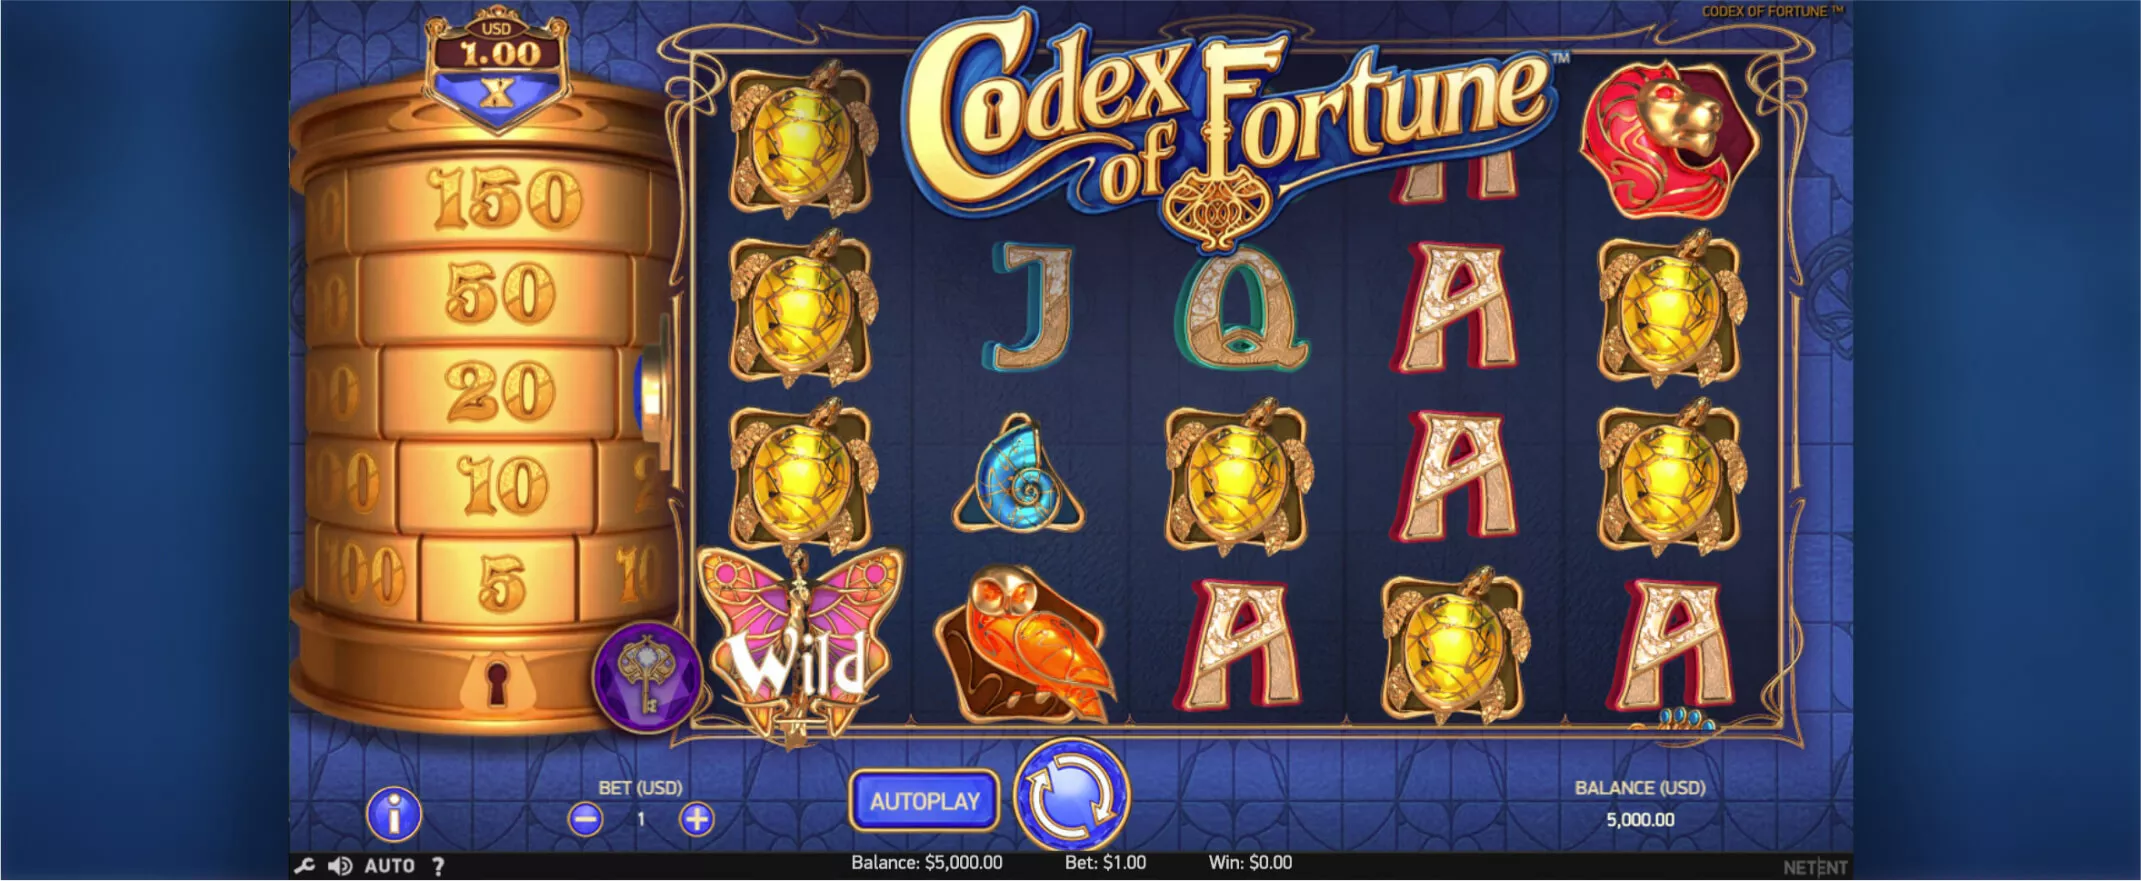 Codex of Fortune screenshot of the reels